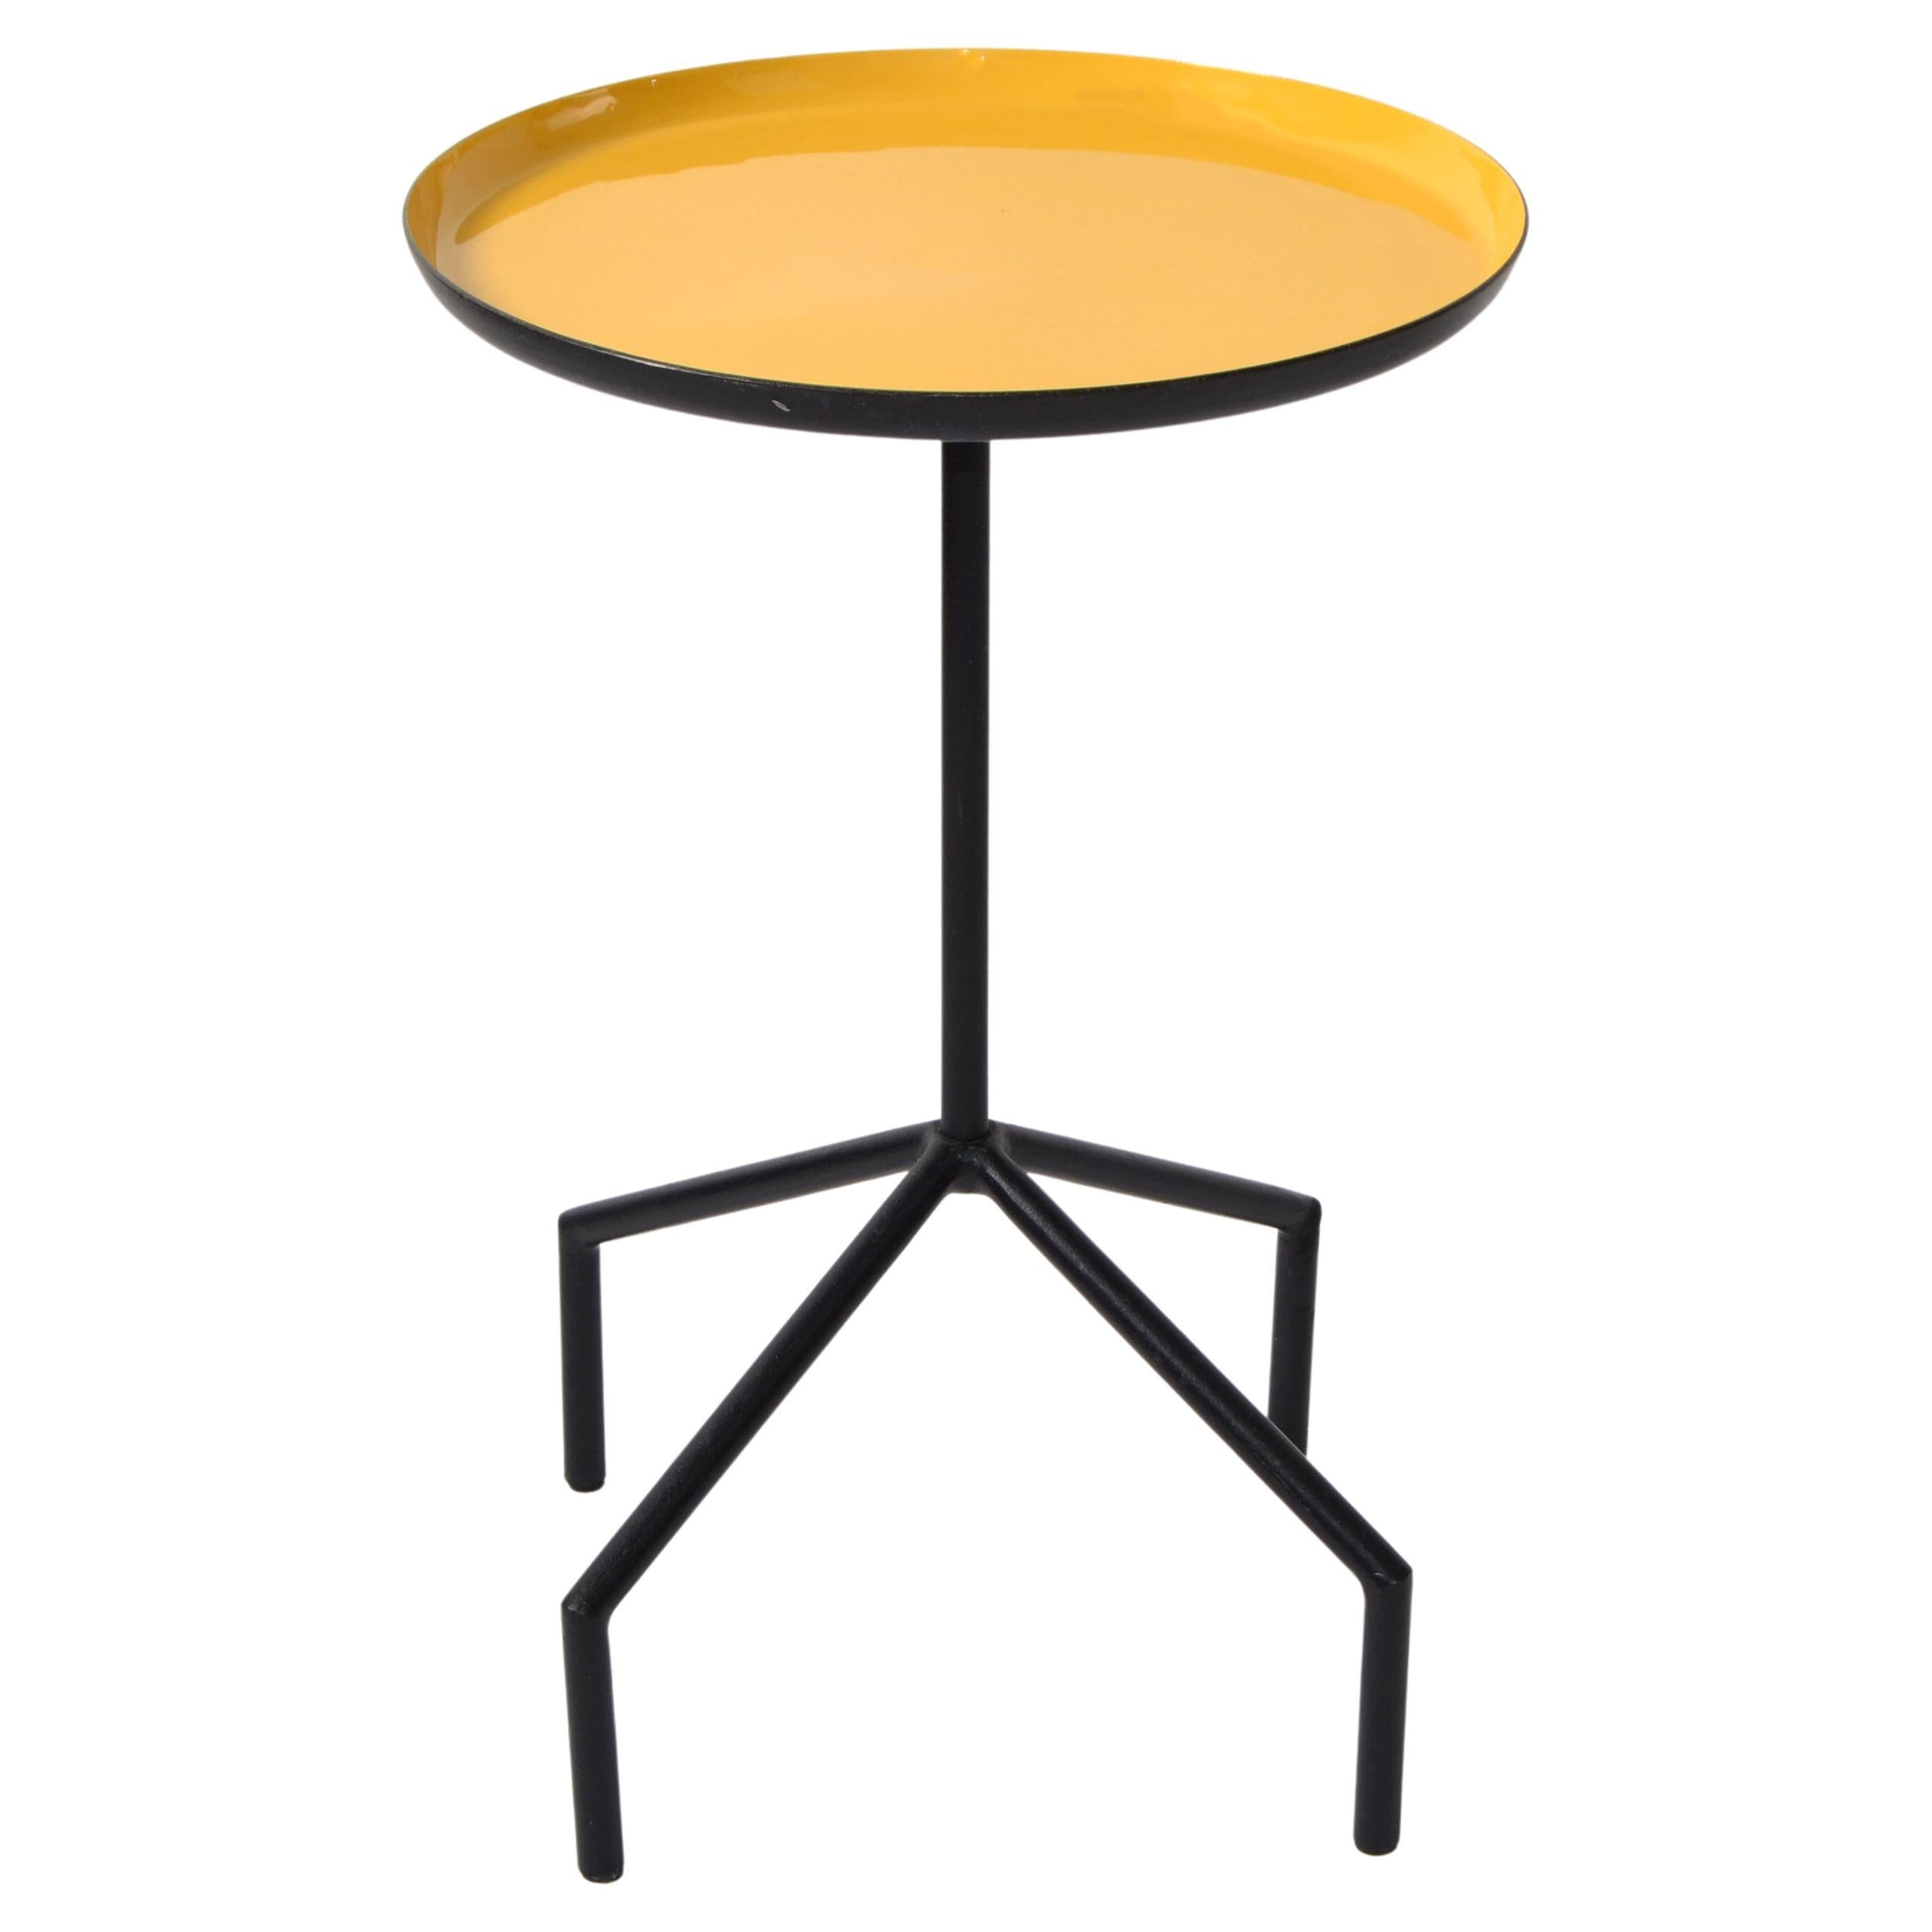 1980 Herman Miller Style Yellow Enamel Tray Side Table Black Iron Gazelle Base For Sale